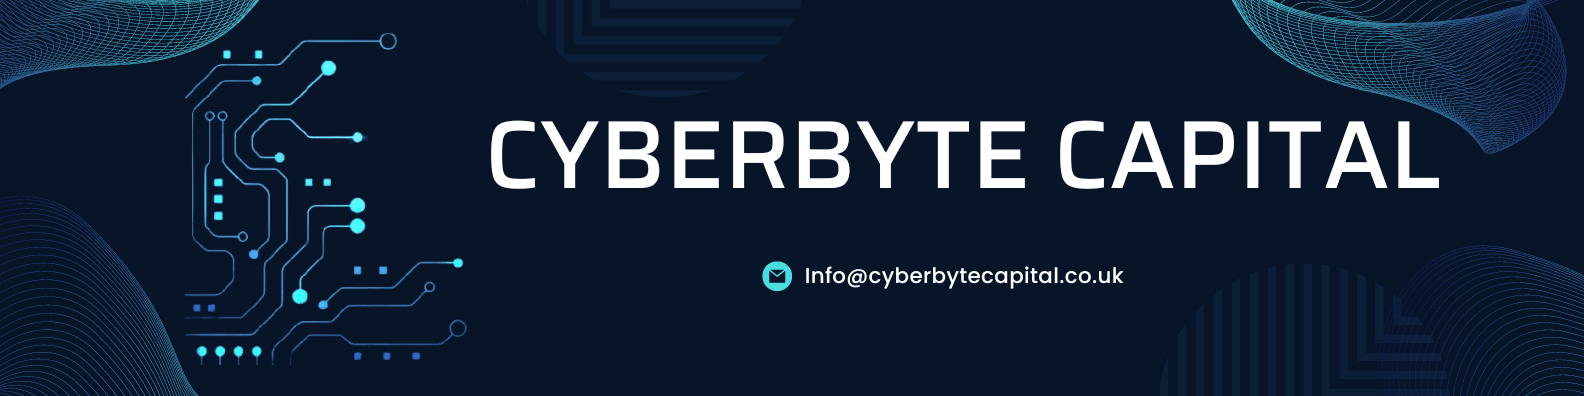 CyberByte-Capital bannière